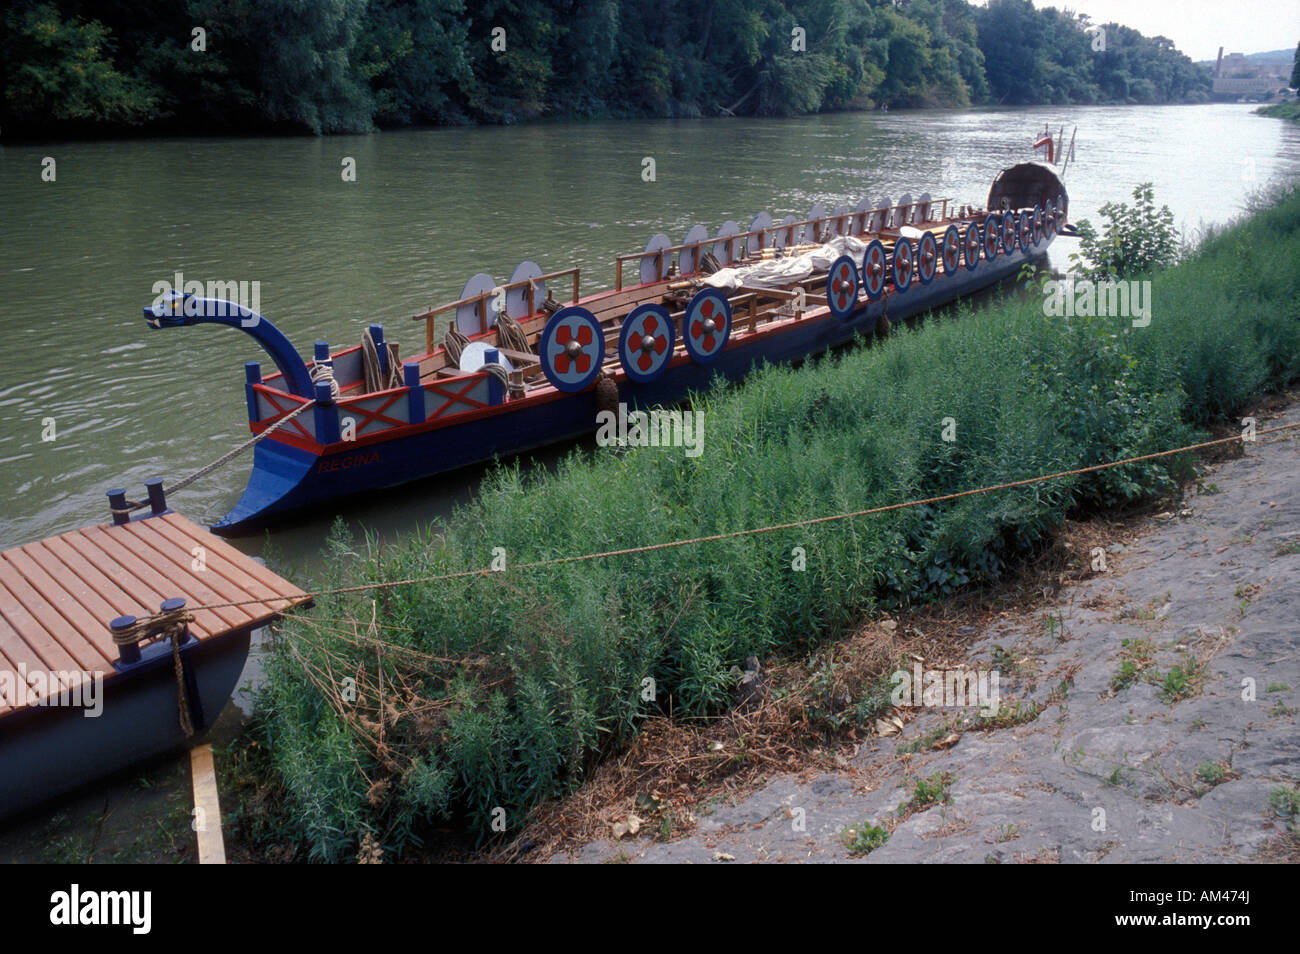 Central Europe, Hungary, Budapest, replica of 4th century Roman warship docked in the Danube River near Aquincum. Stock Photo